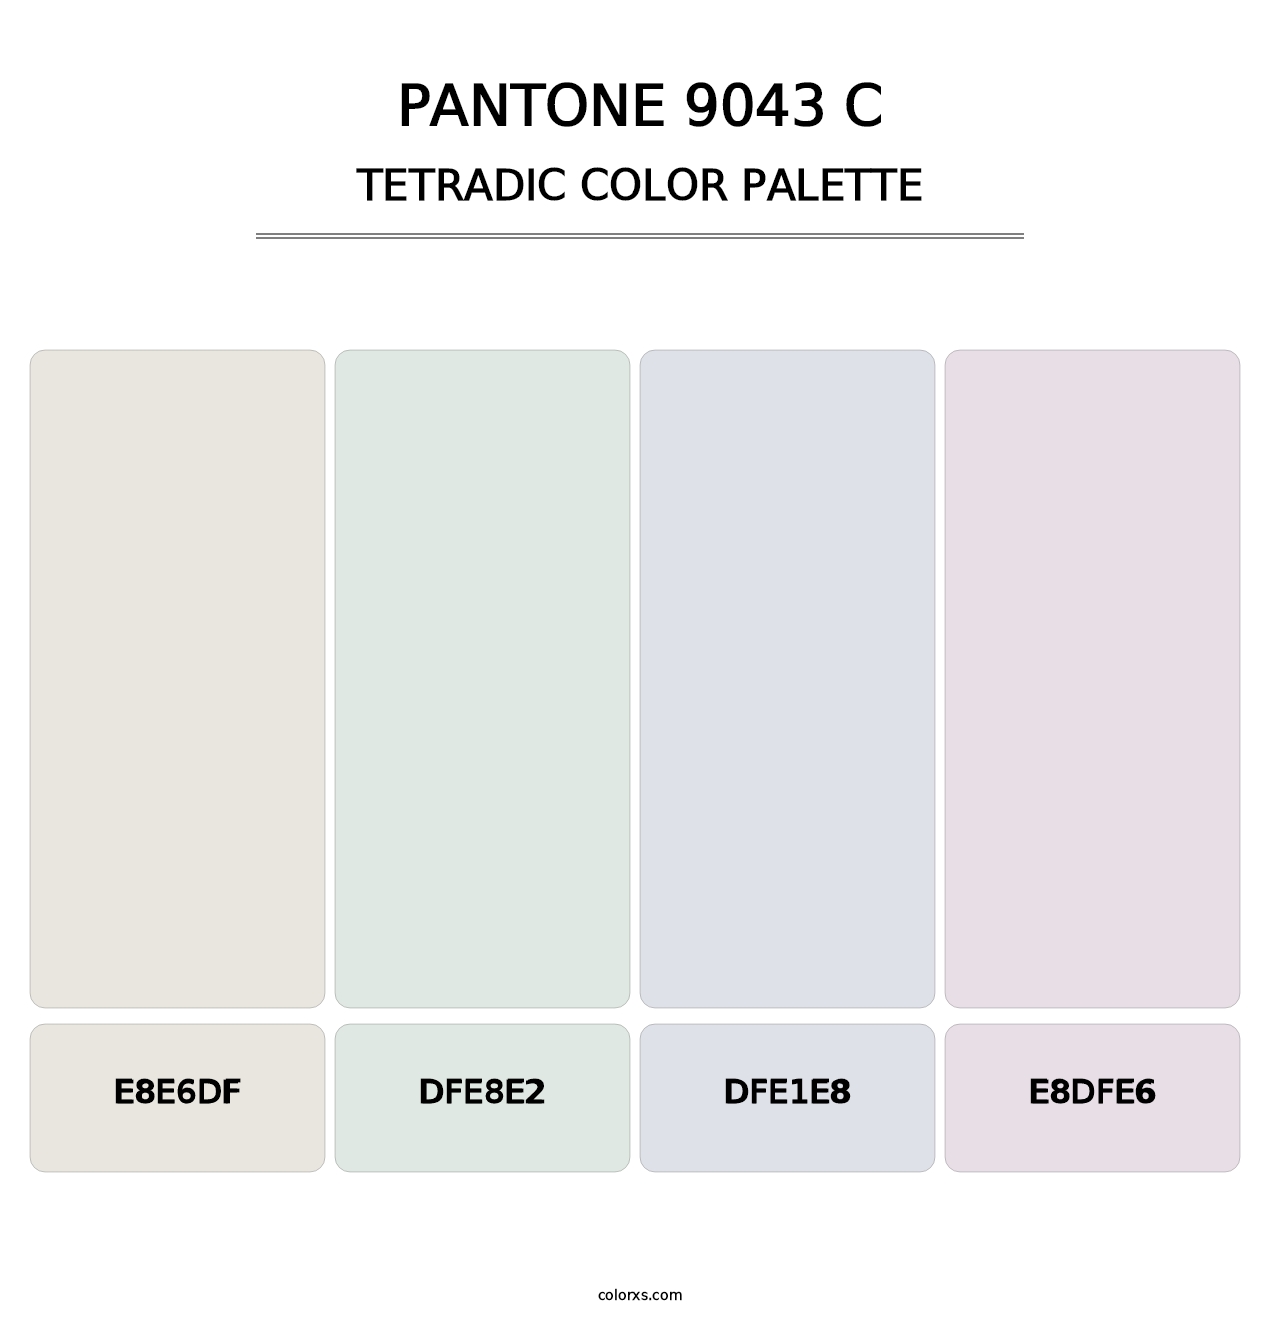 PANTONE 9043 C - Tetradic Color Palette